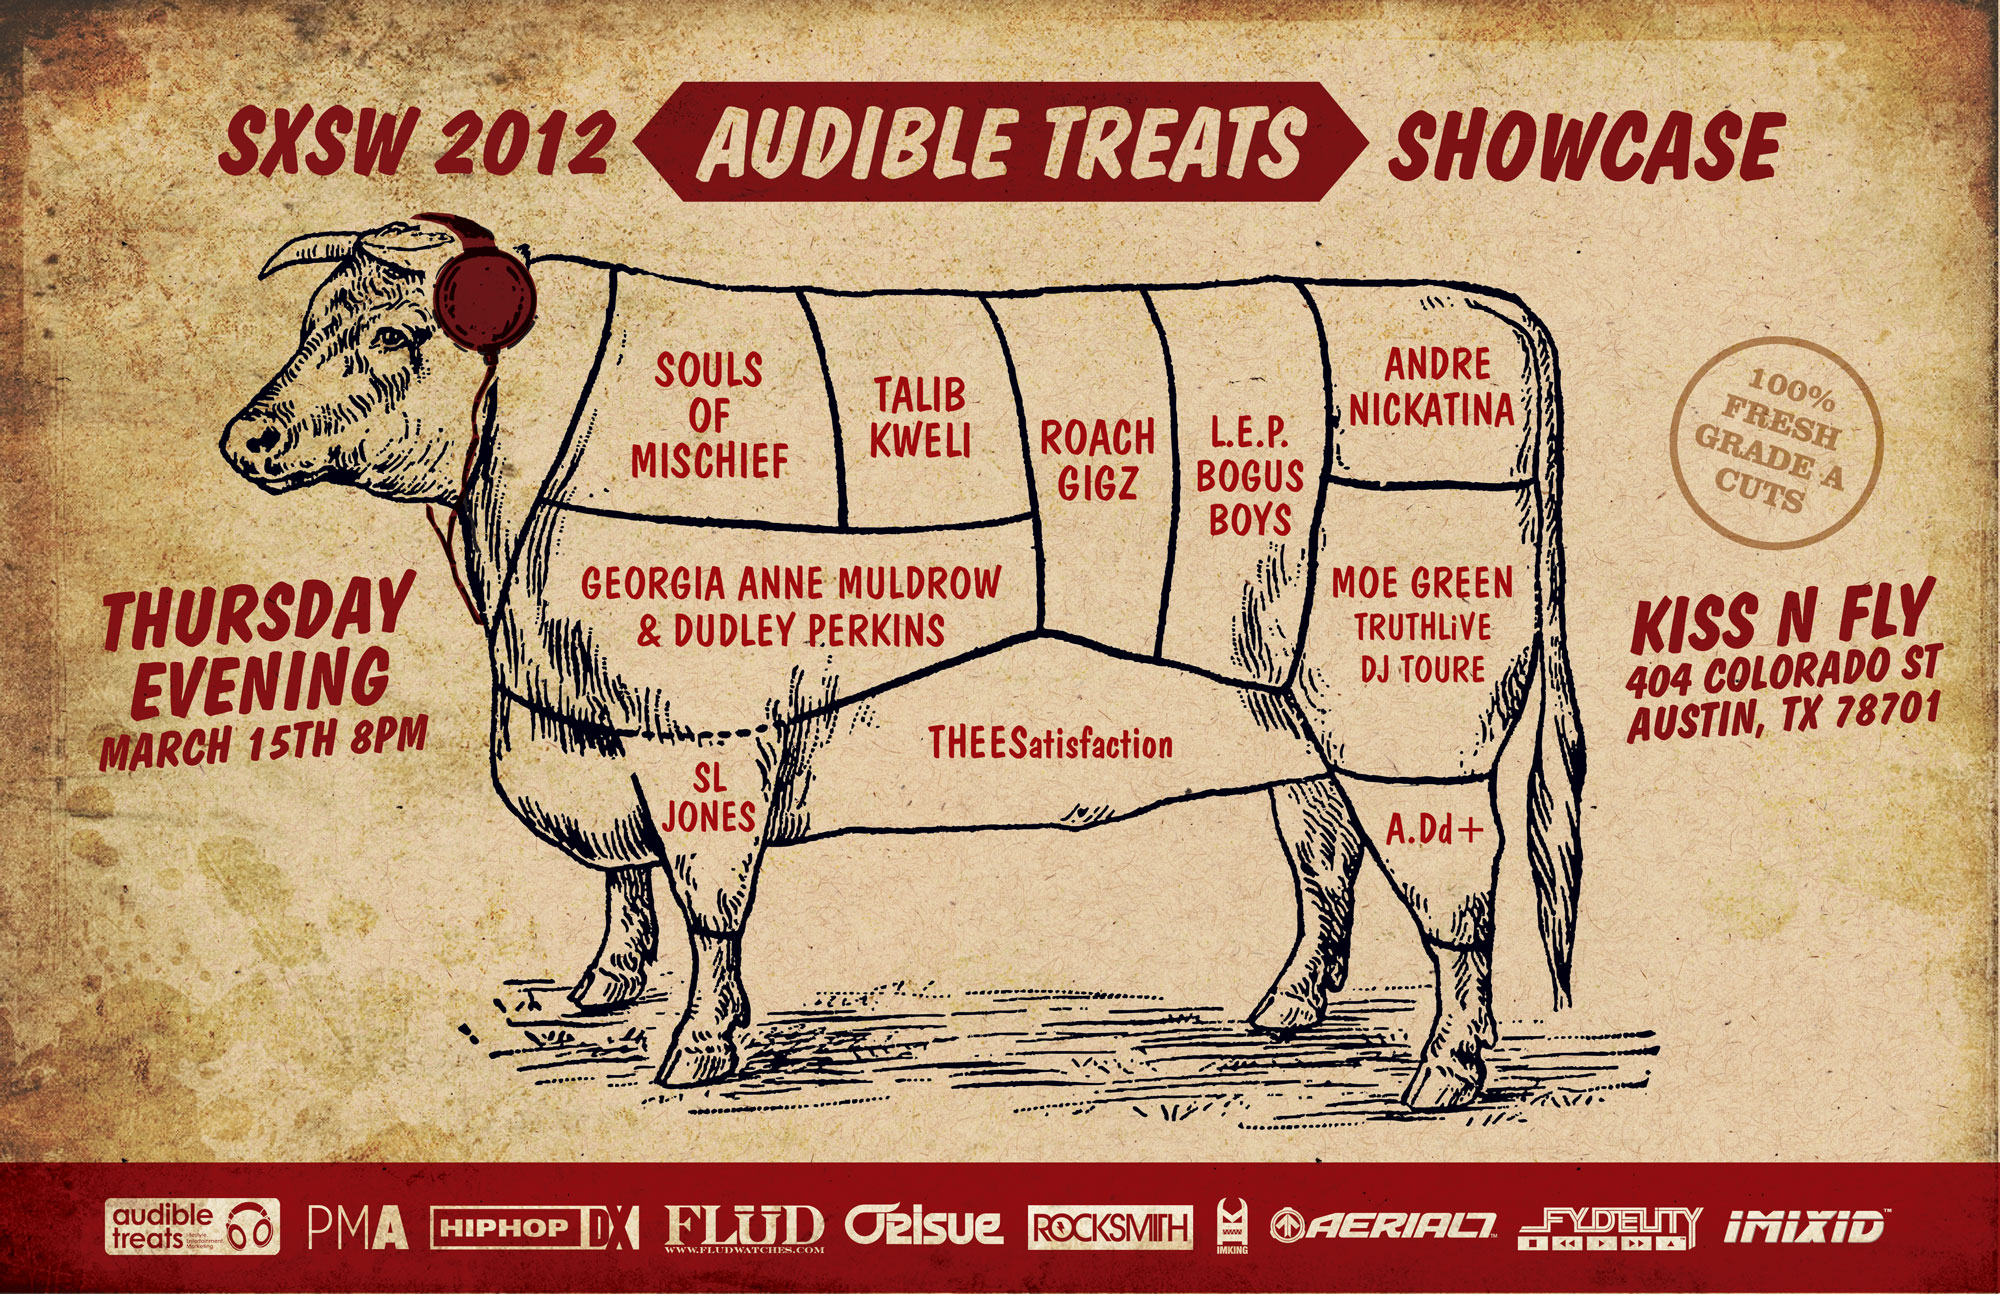 Audible_Treats_SXSW_2012_Showcase_WEB